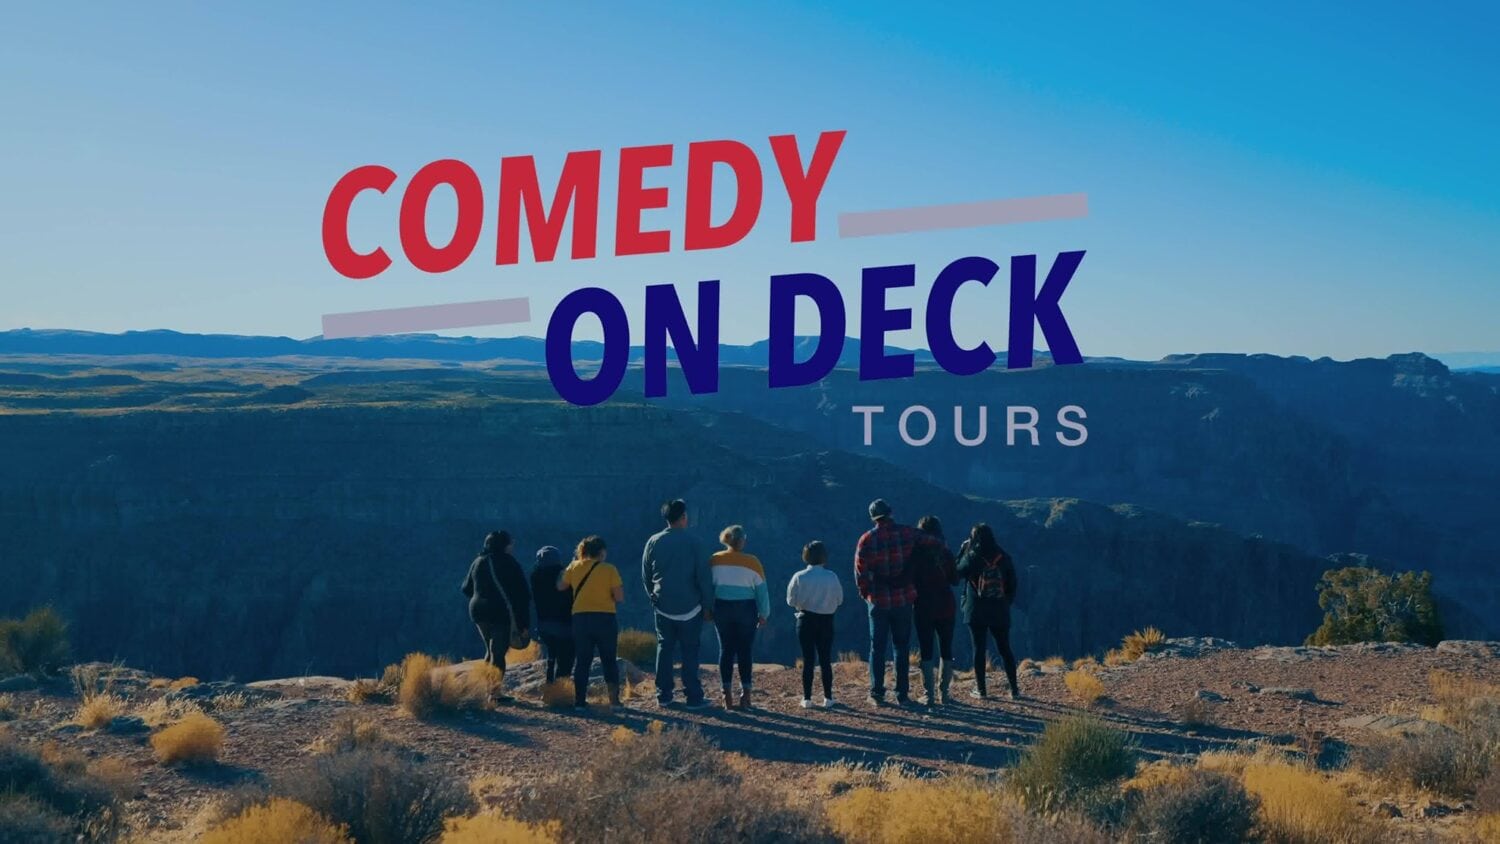 comedy deck tours